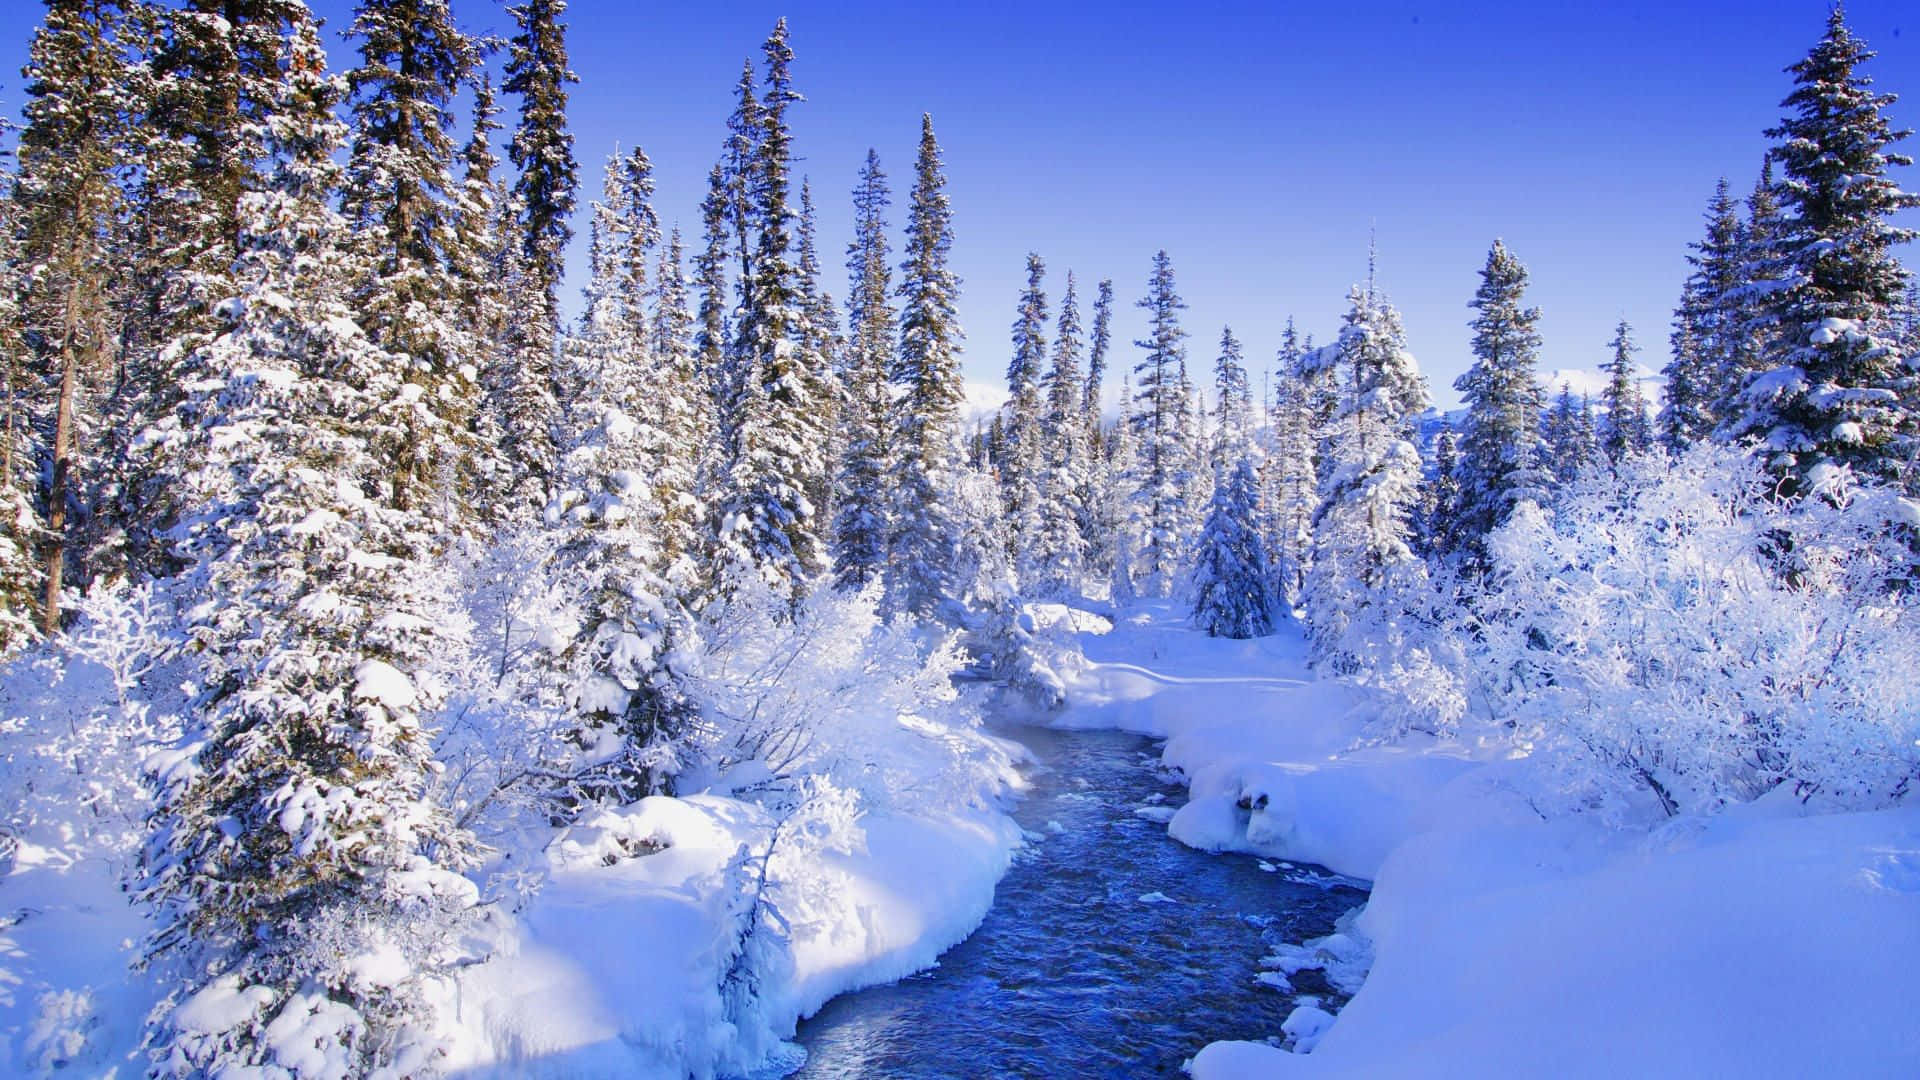 Winter Wonderland Scenery Background